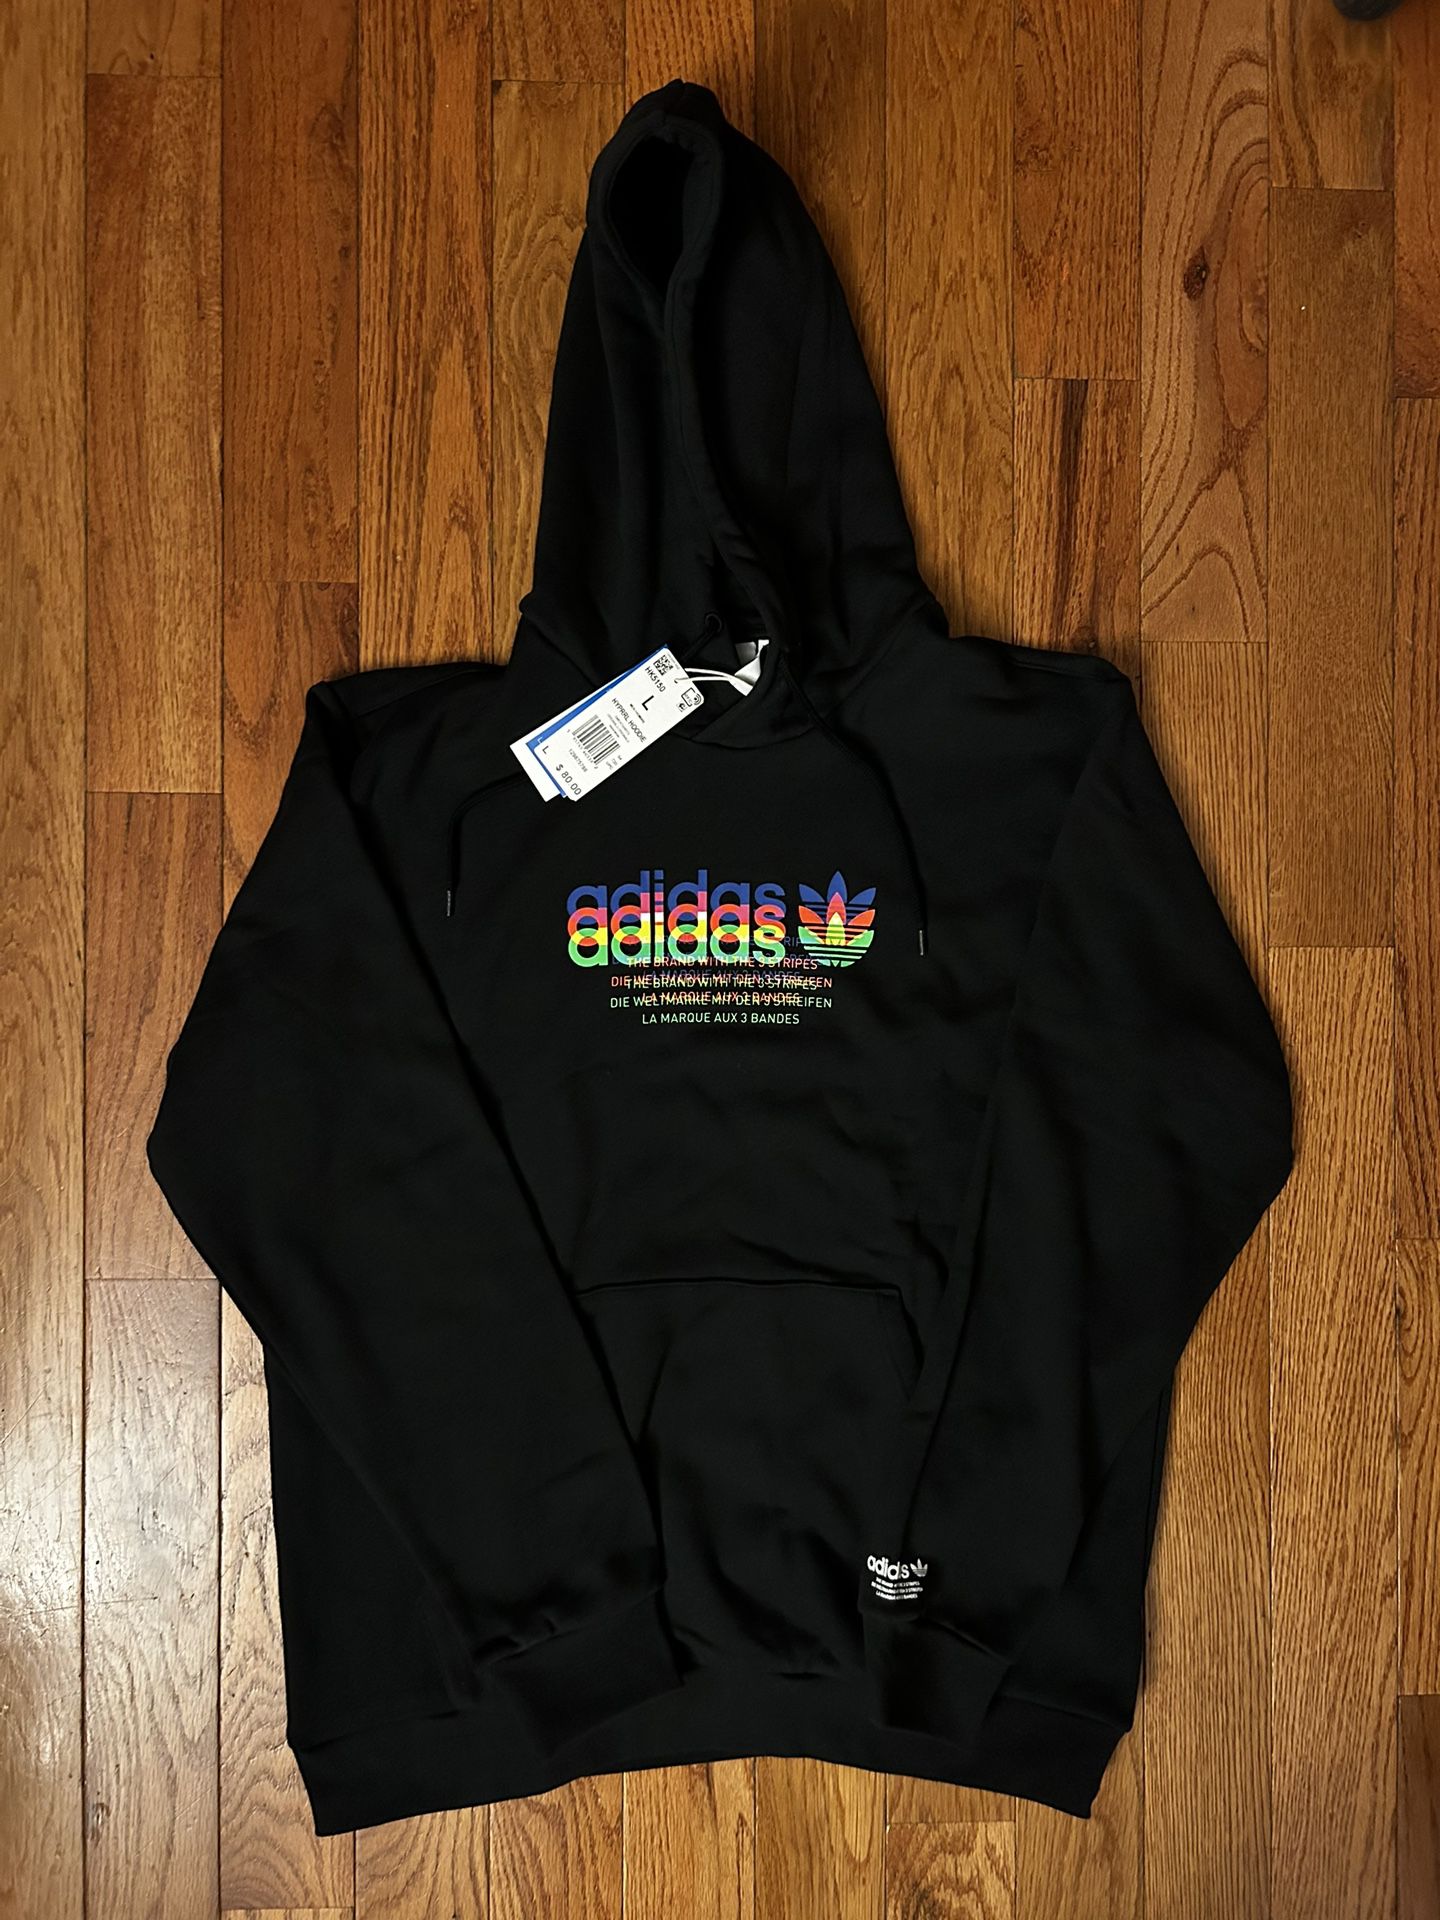 Adidas Originals Hyperreal Rainbow Hoodie Sz Large NEW